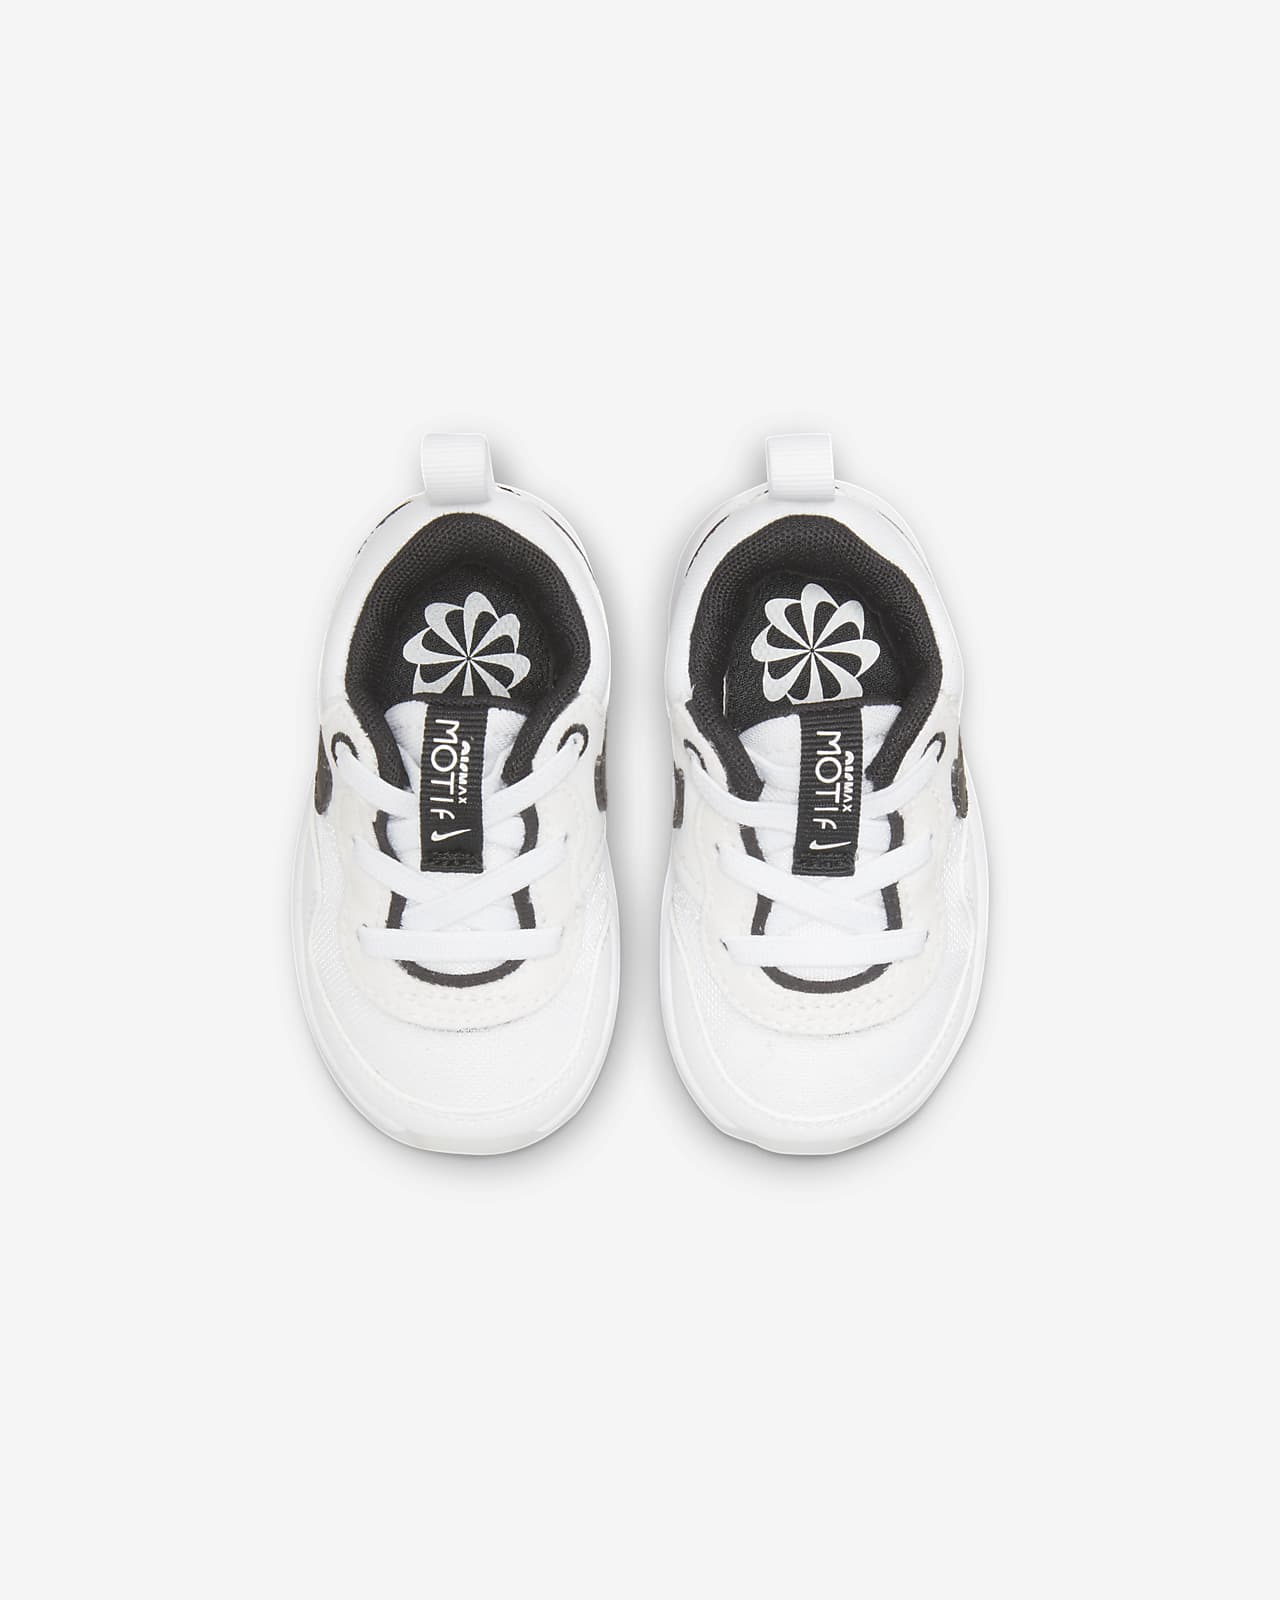 Nike Air Motif Baby/Toddler Shoes. Max